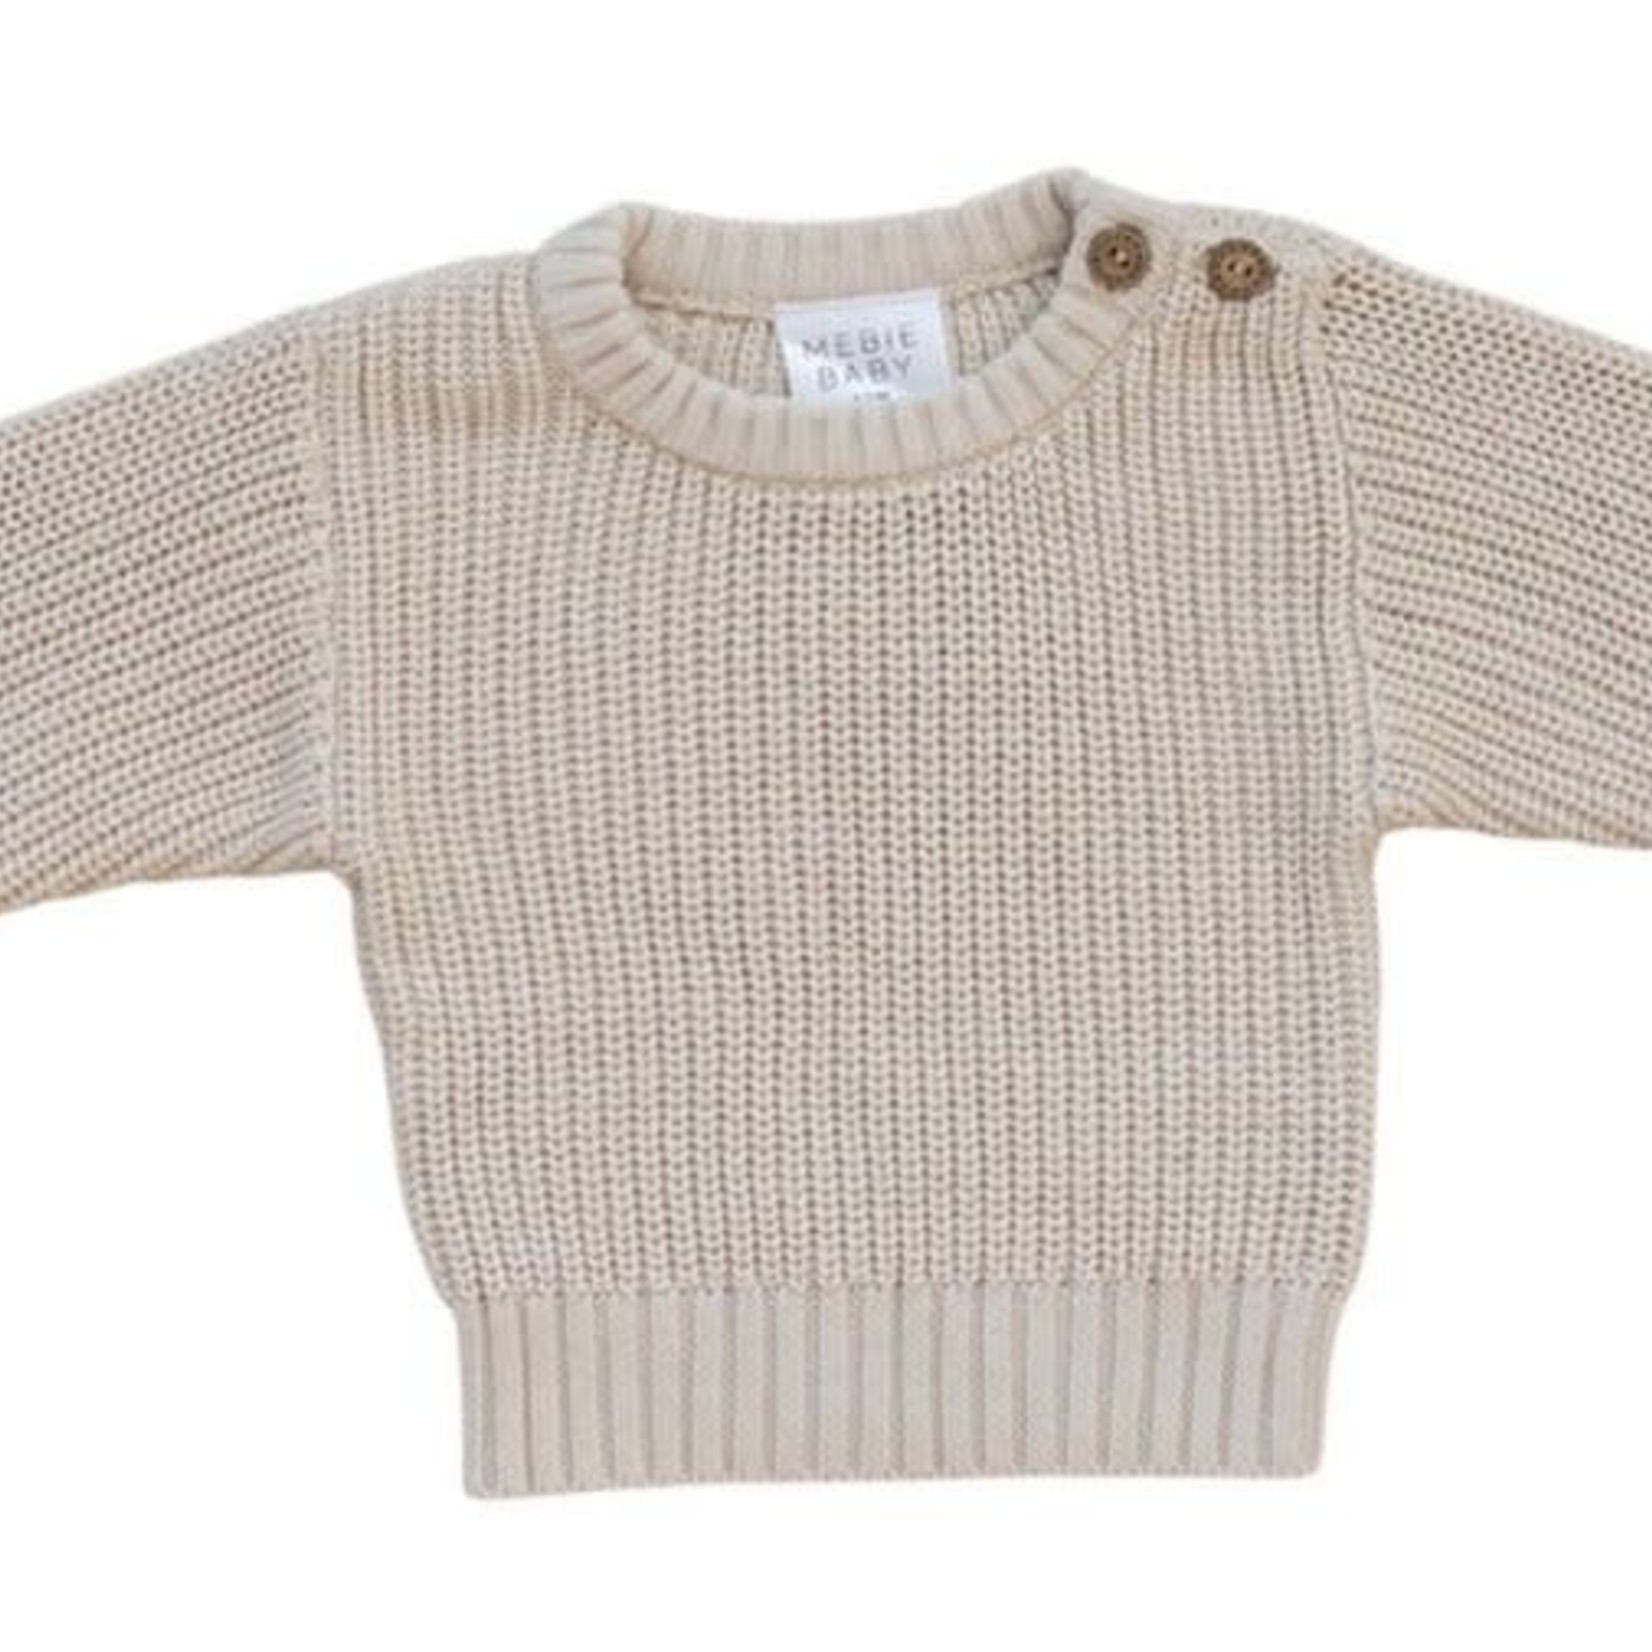 Mebie Baby Knit Sweater - Cream